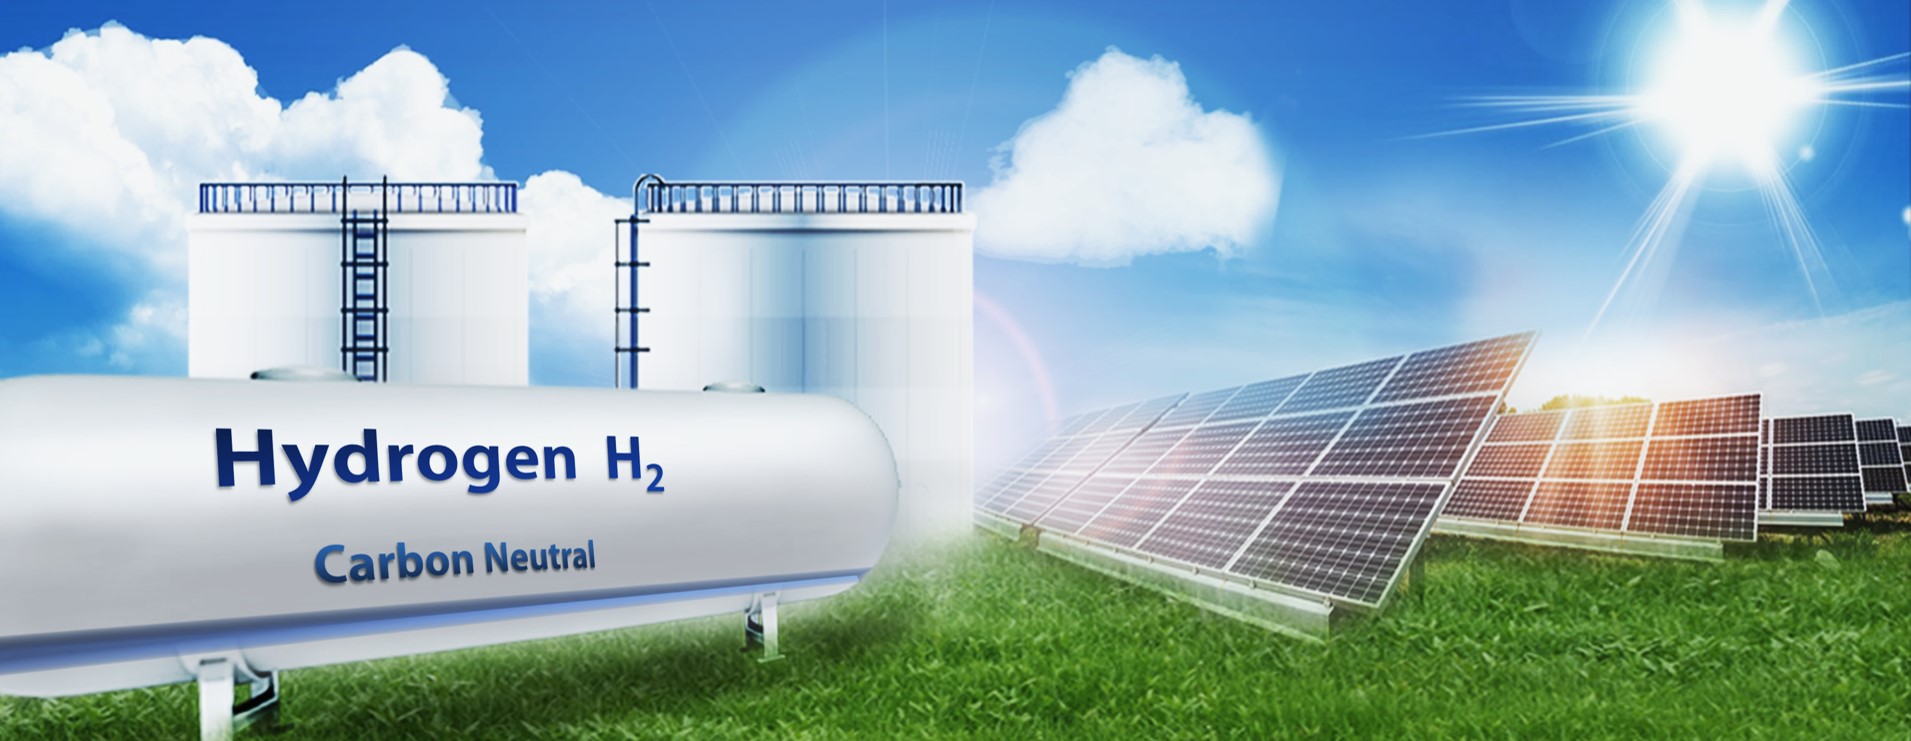 About Hydrogen Energy ALternatives (HEAL)